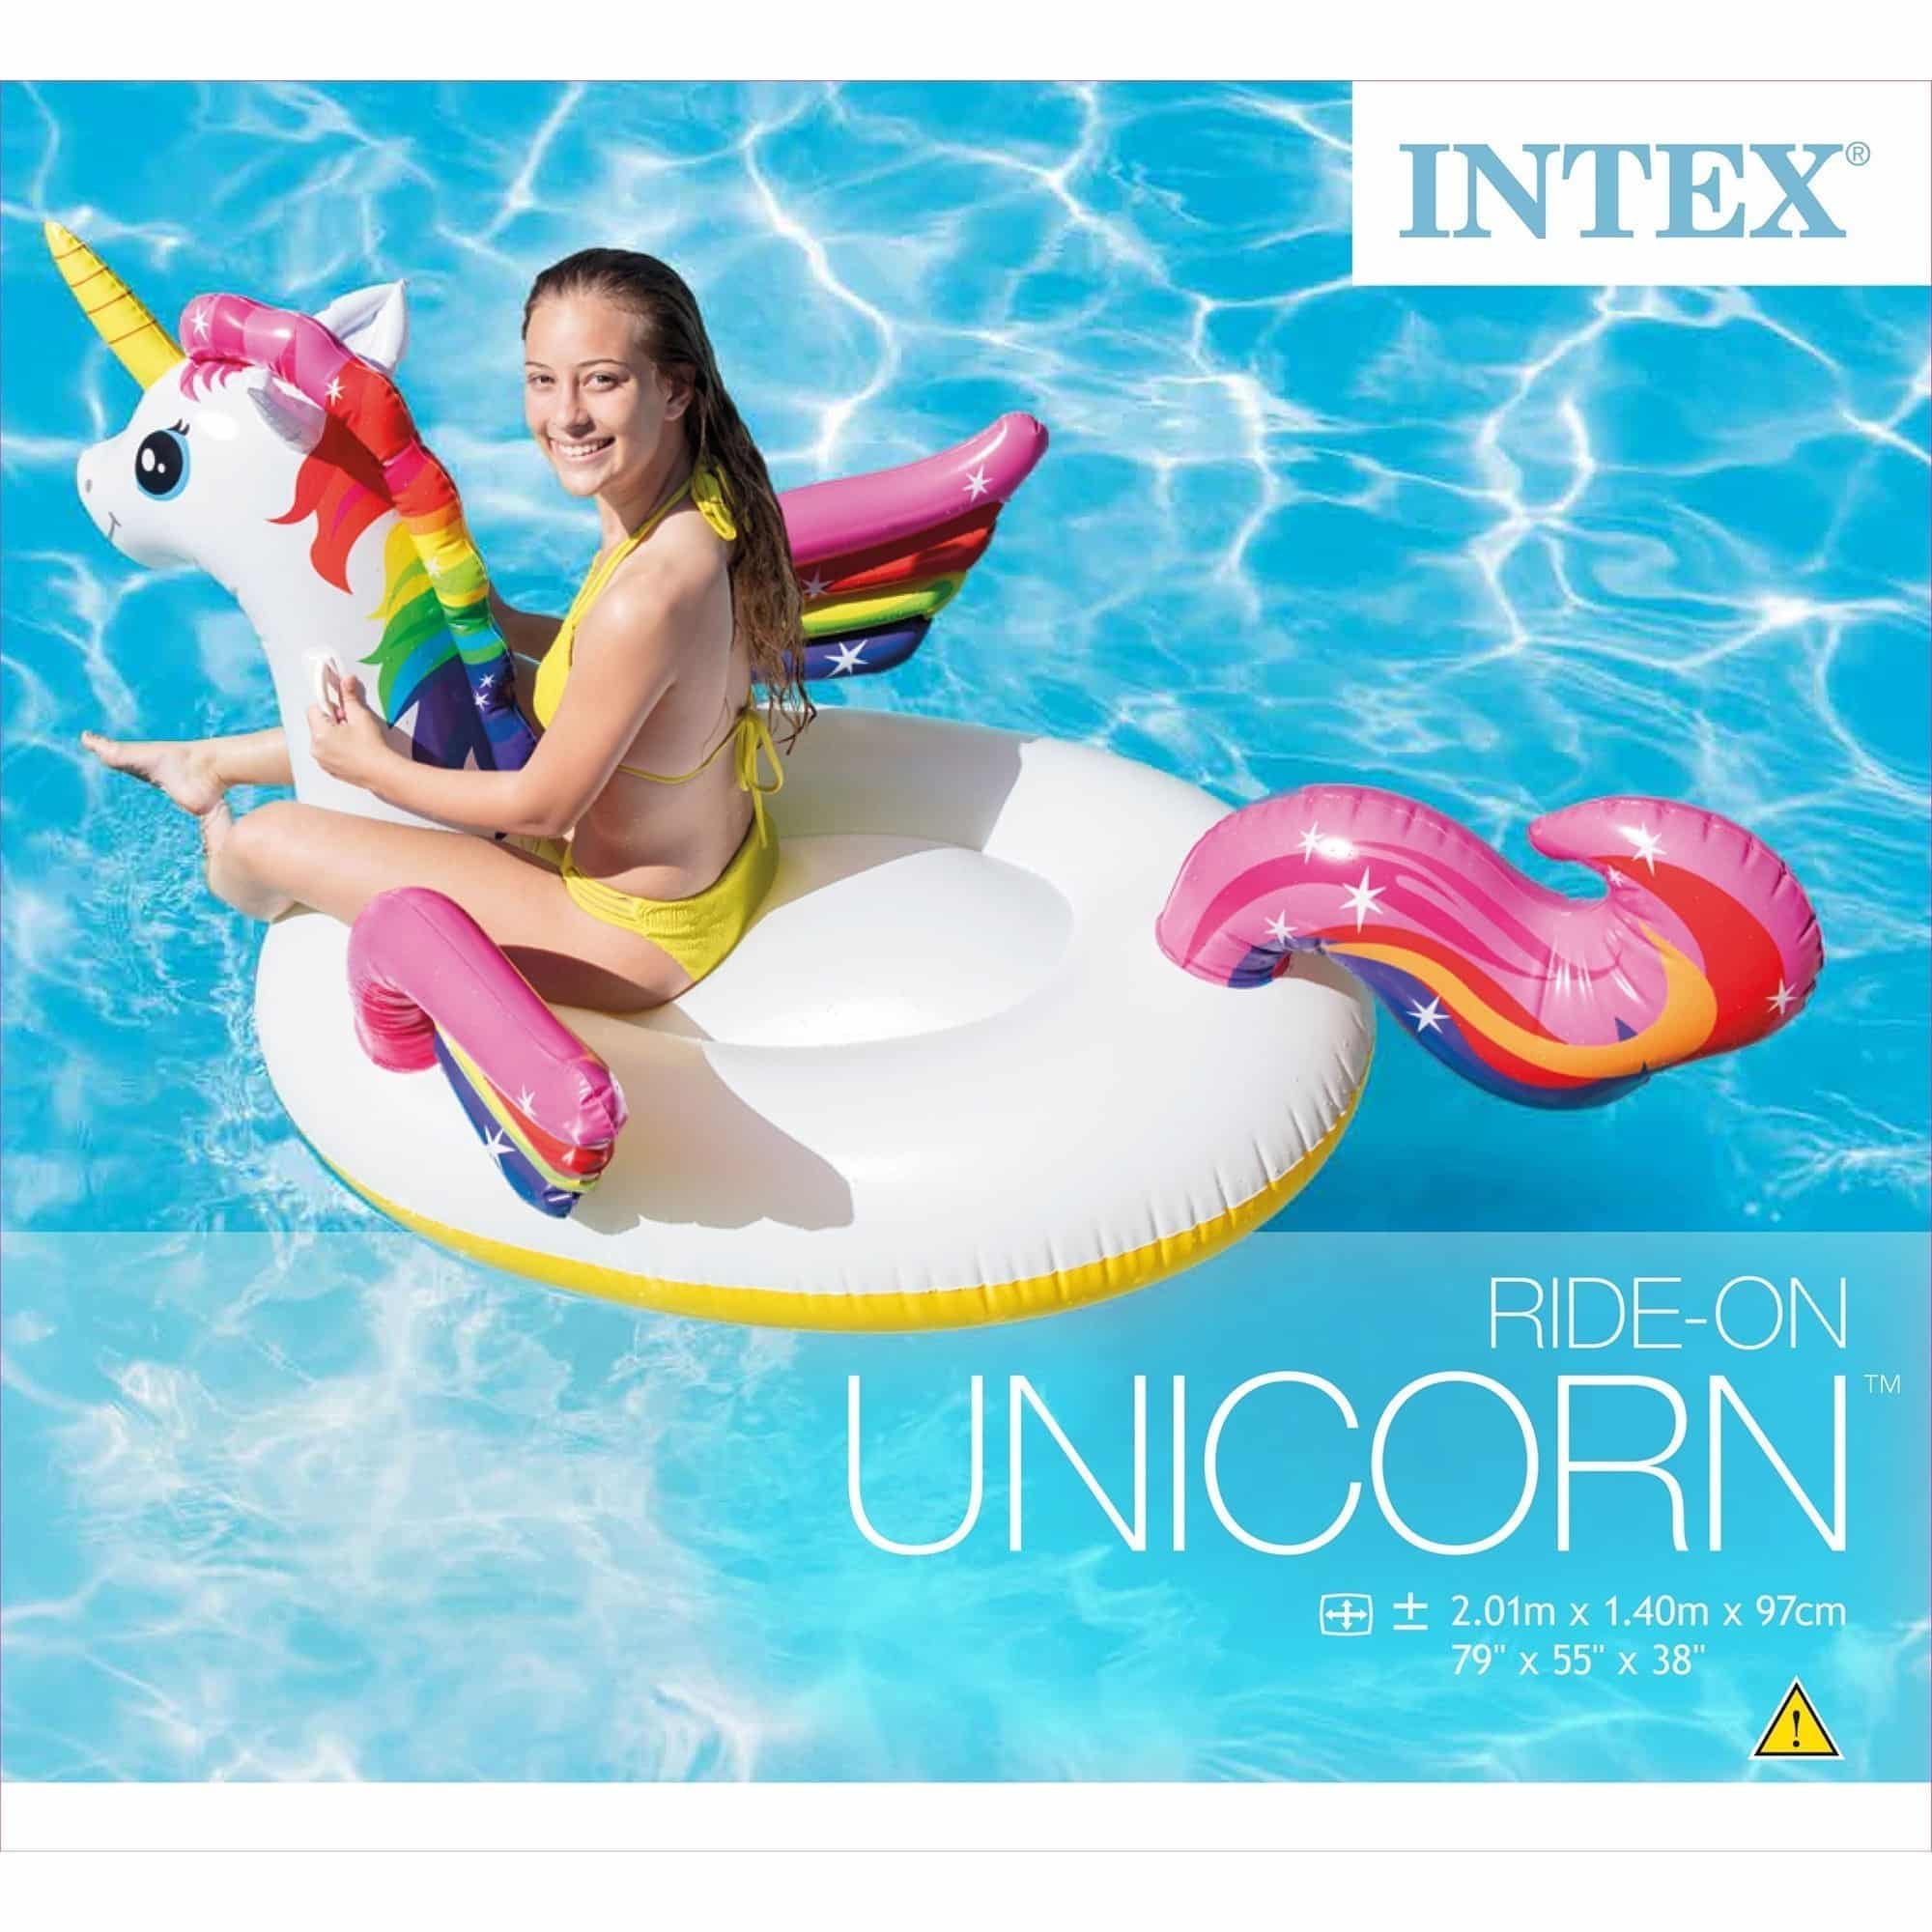 Intex - Unicorn Ride-On